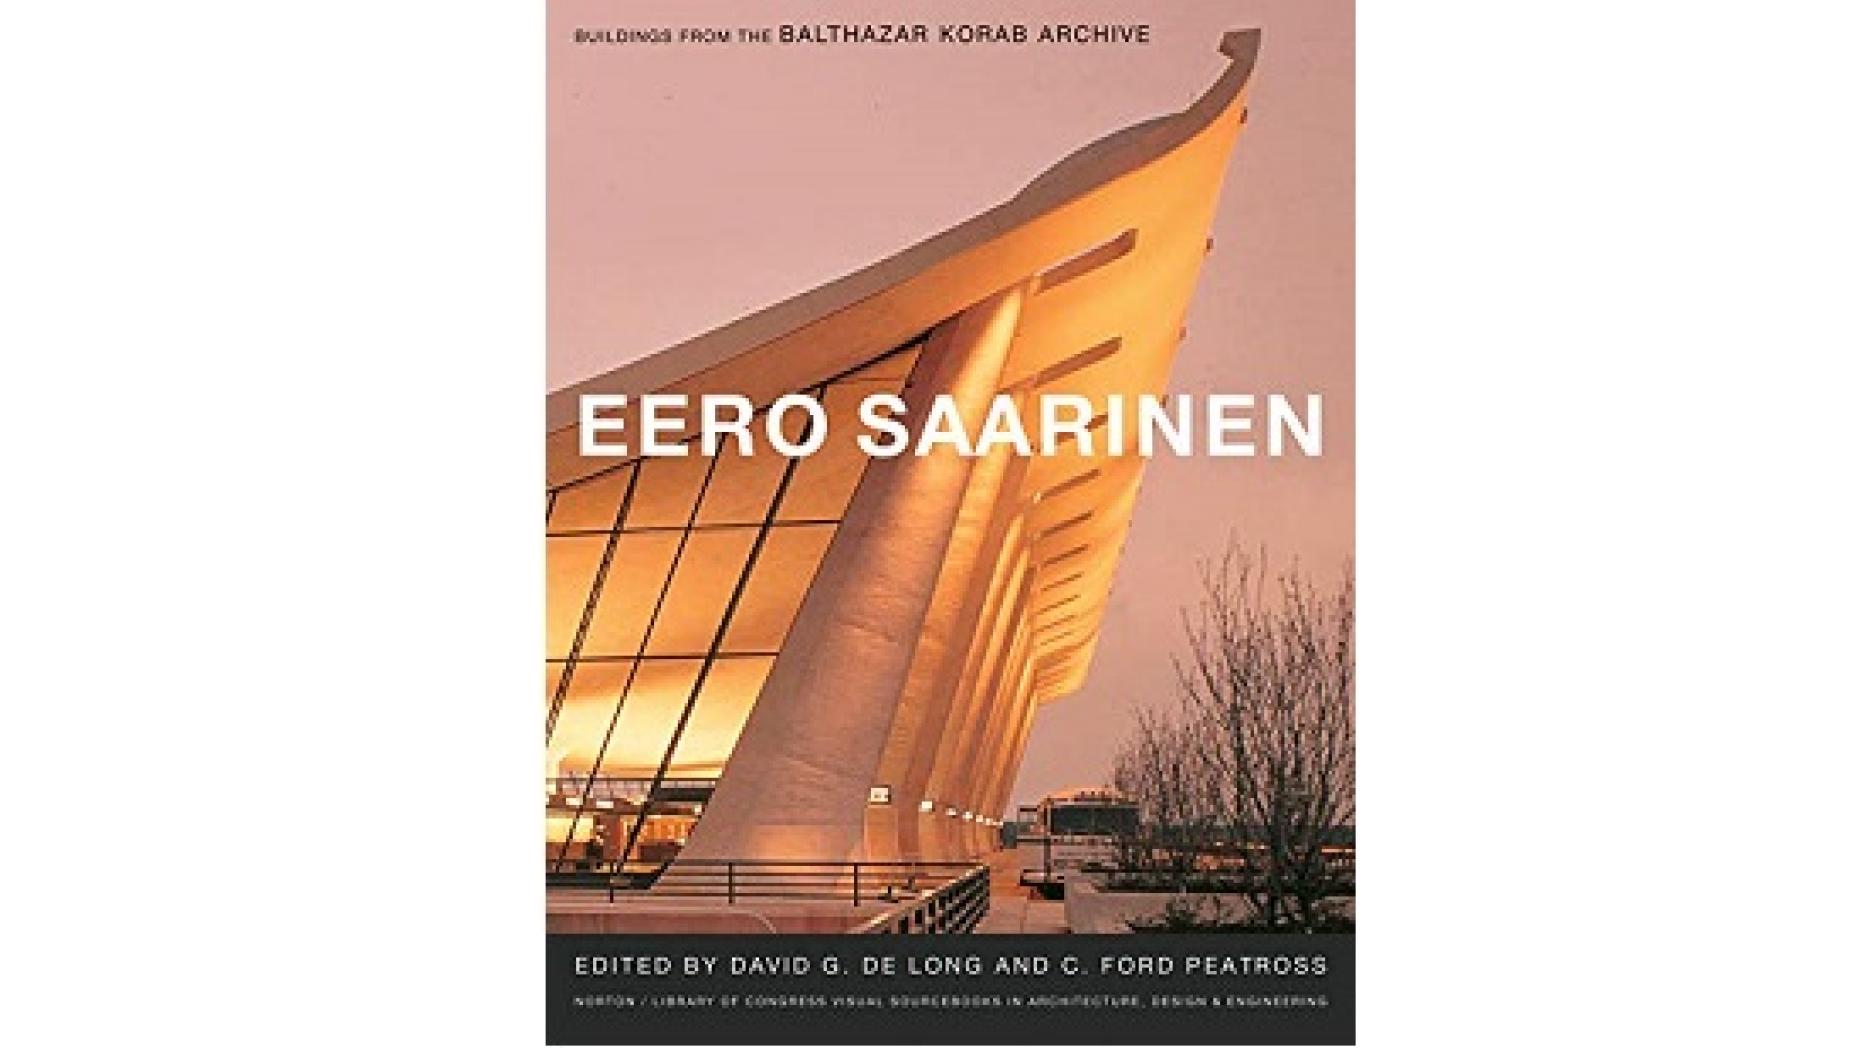 Eero Saarinen: Buildings from the Balthazar Korab Archive 